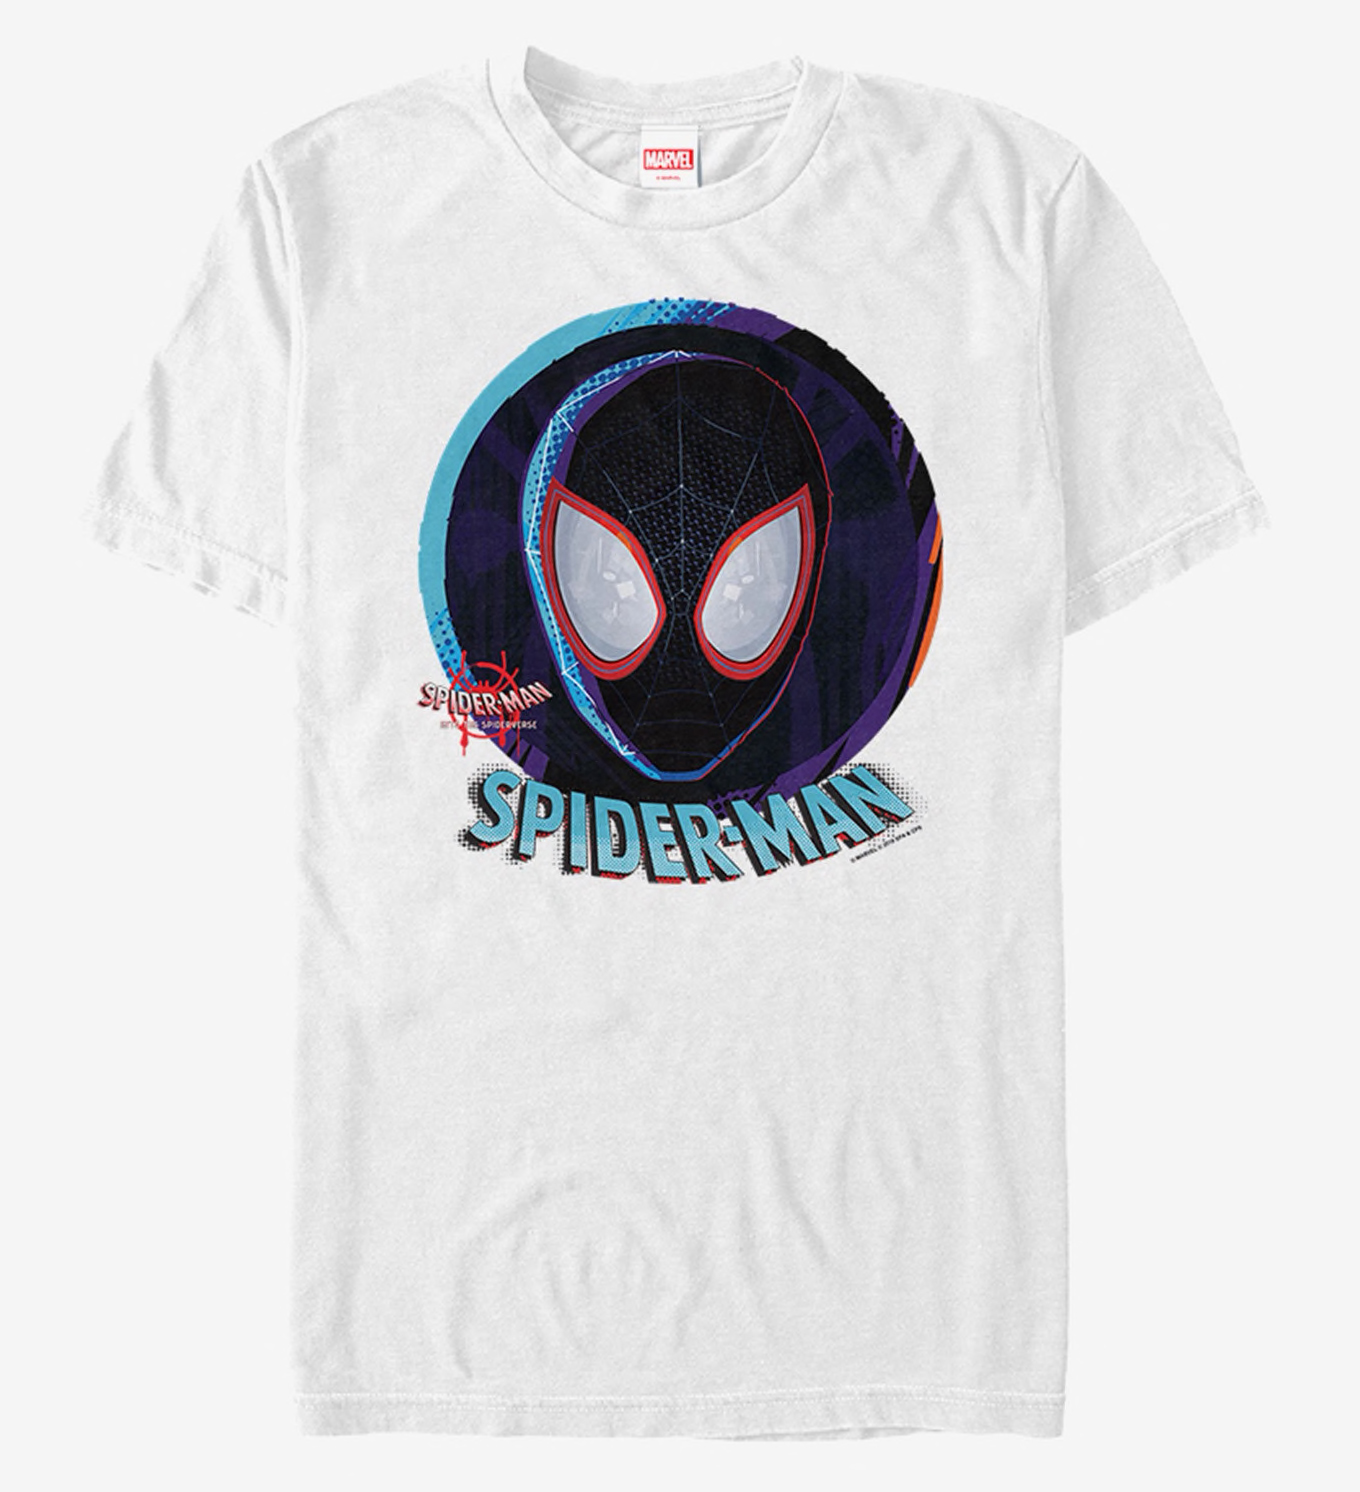 spiderman-spider-verse-shirt-match-jordan-1-origin-story-14